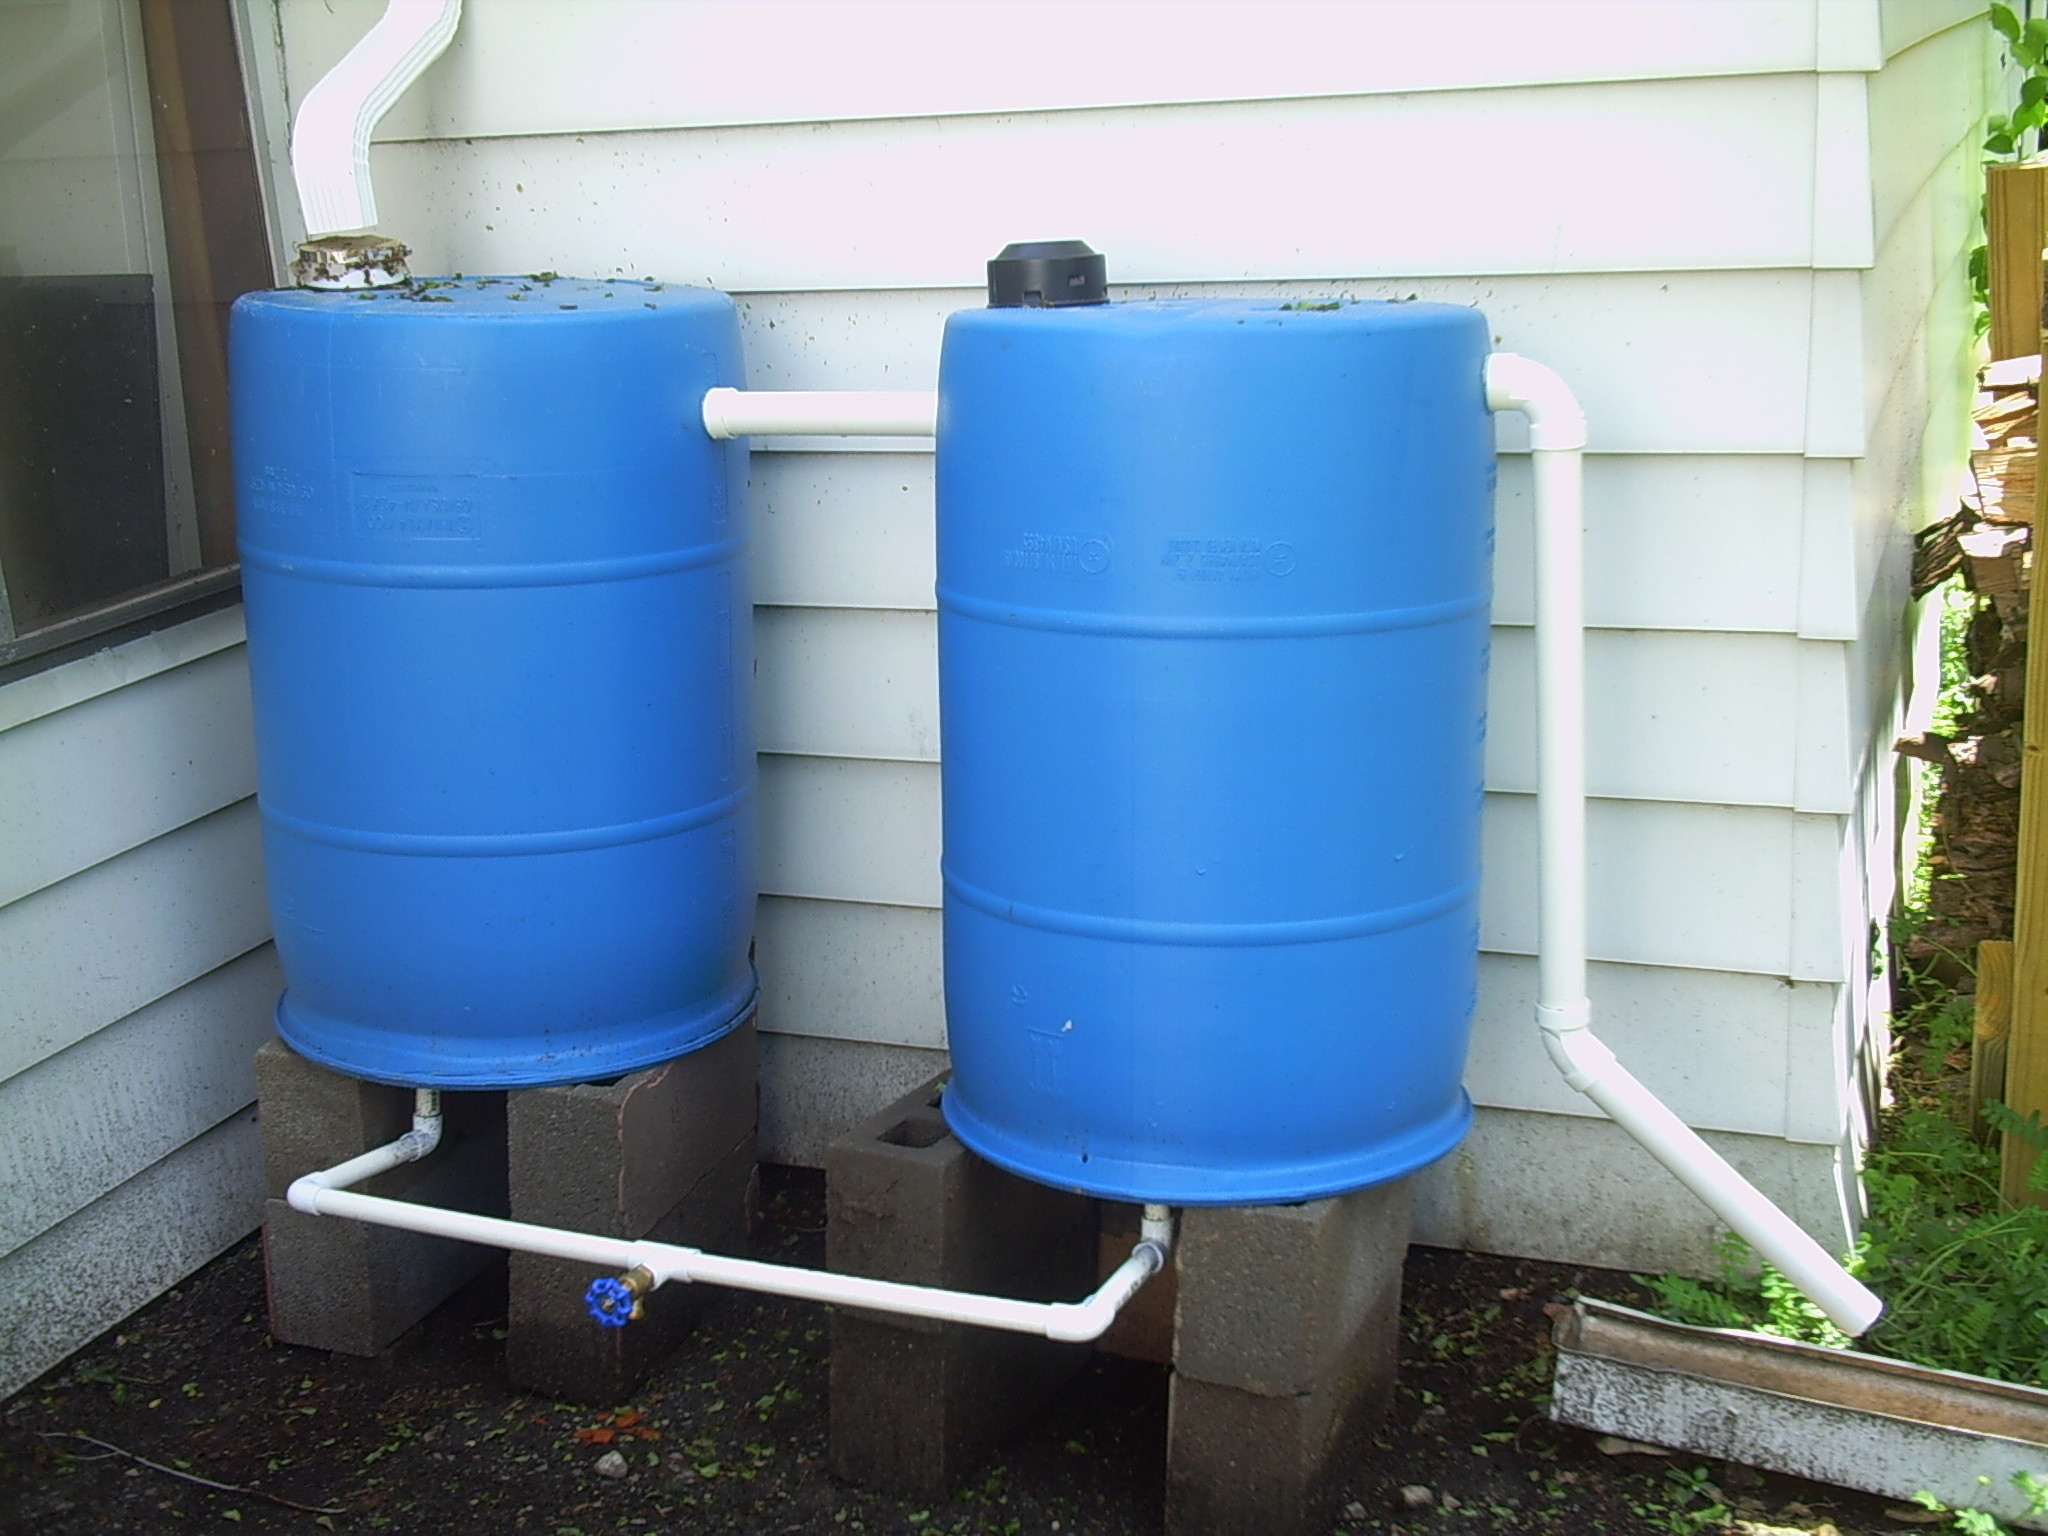 Best ideas about DIY Rain Barrel
. Save or Pin Rain Barrels 6 Steps Now.